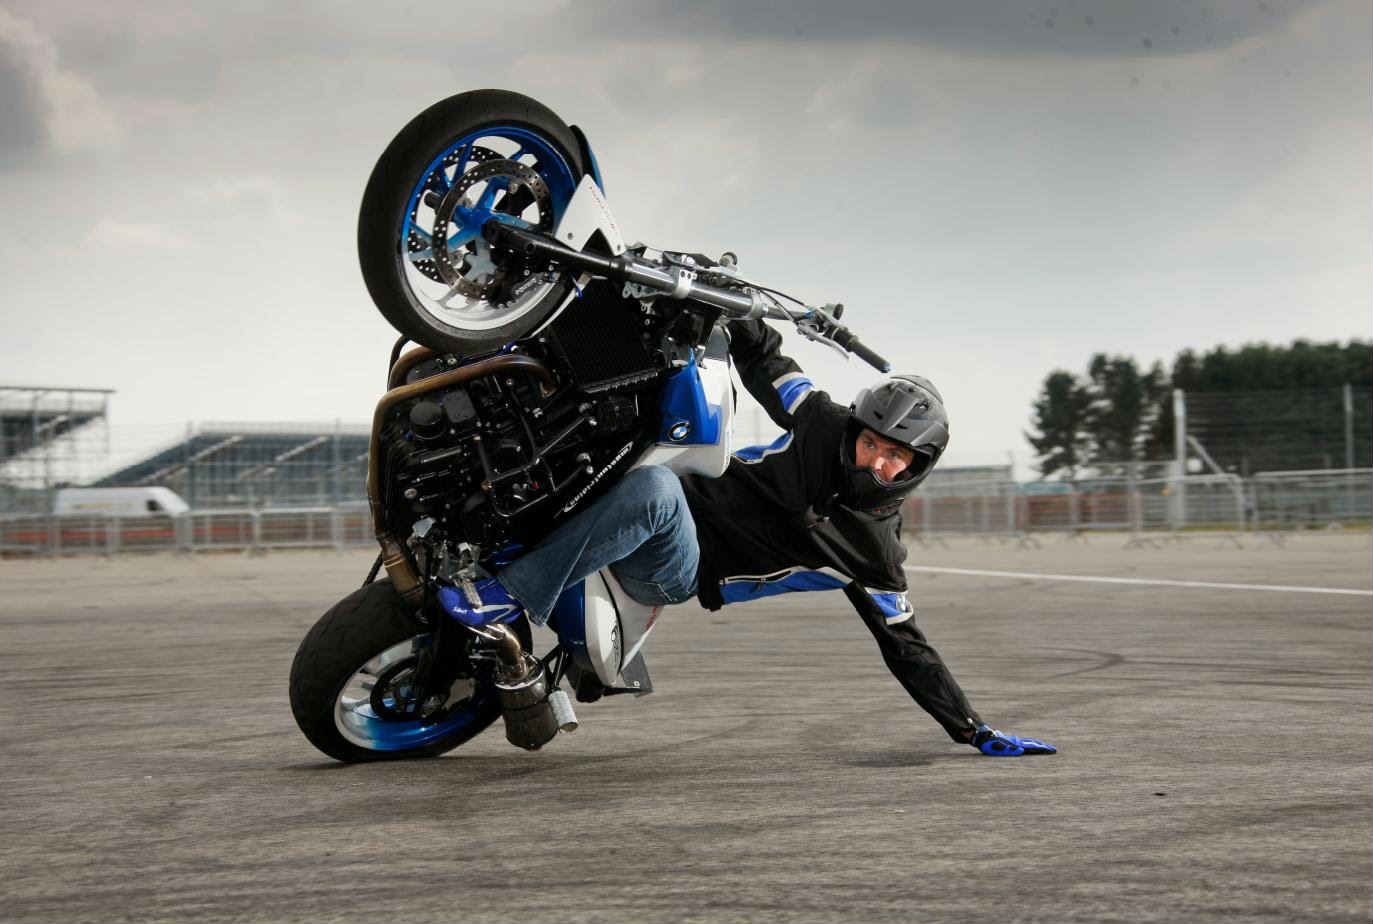 Motorcycle stunt, man doing stationary wheelie